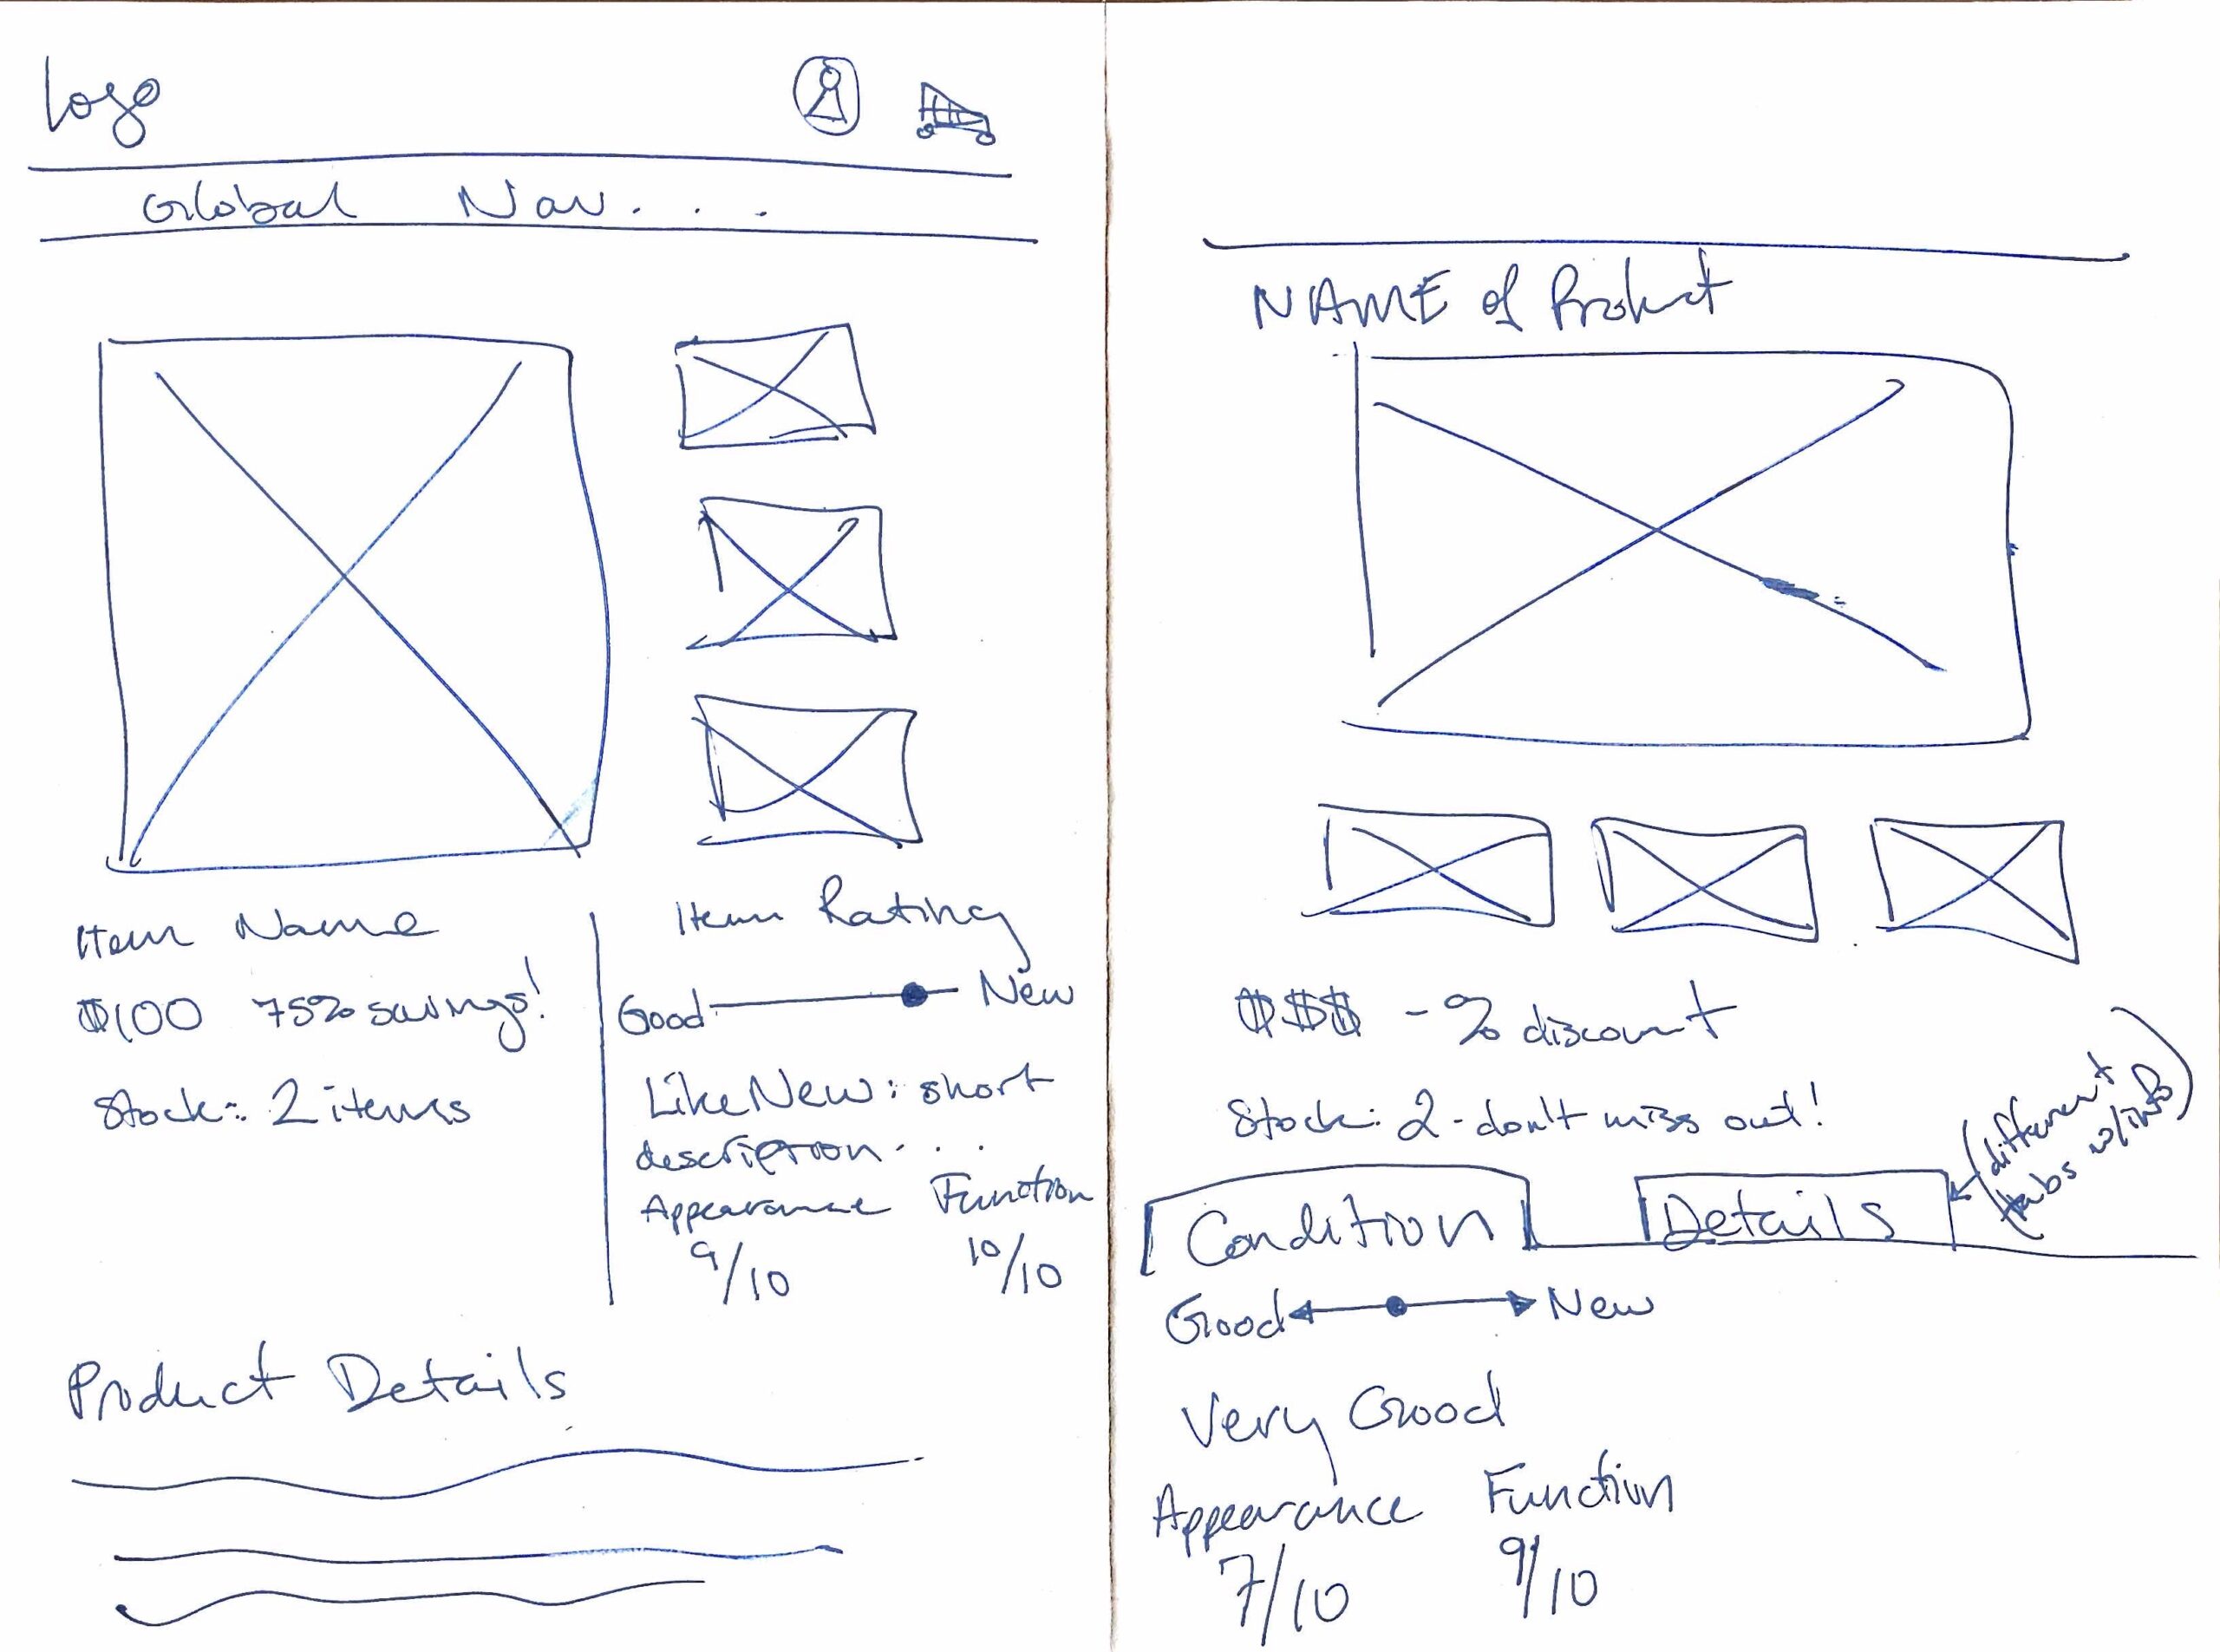 Hand-sketched Rebolet item detail page ideation